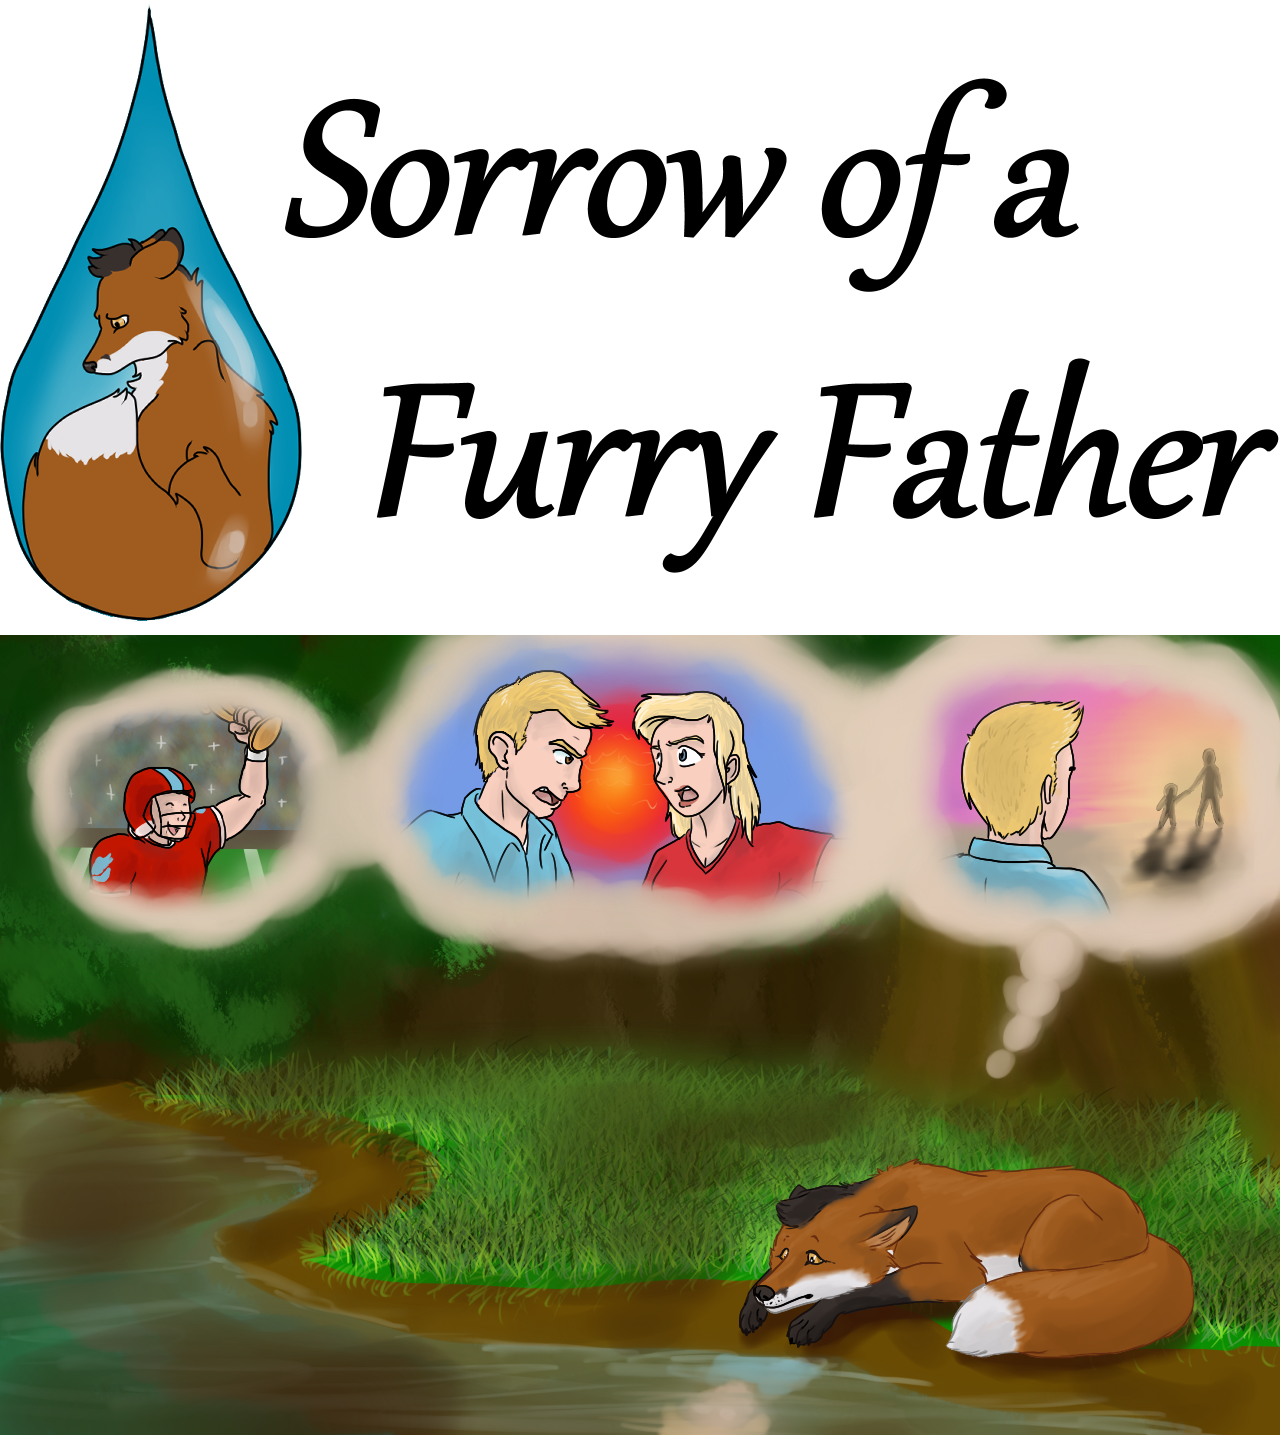 Sorrow of a Furry Father